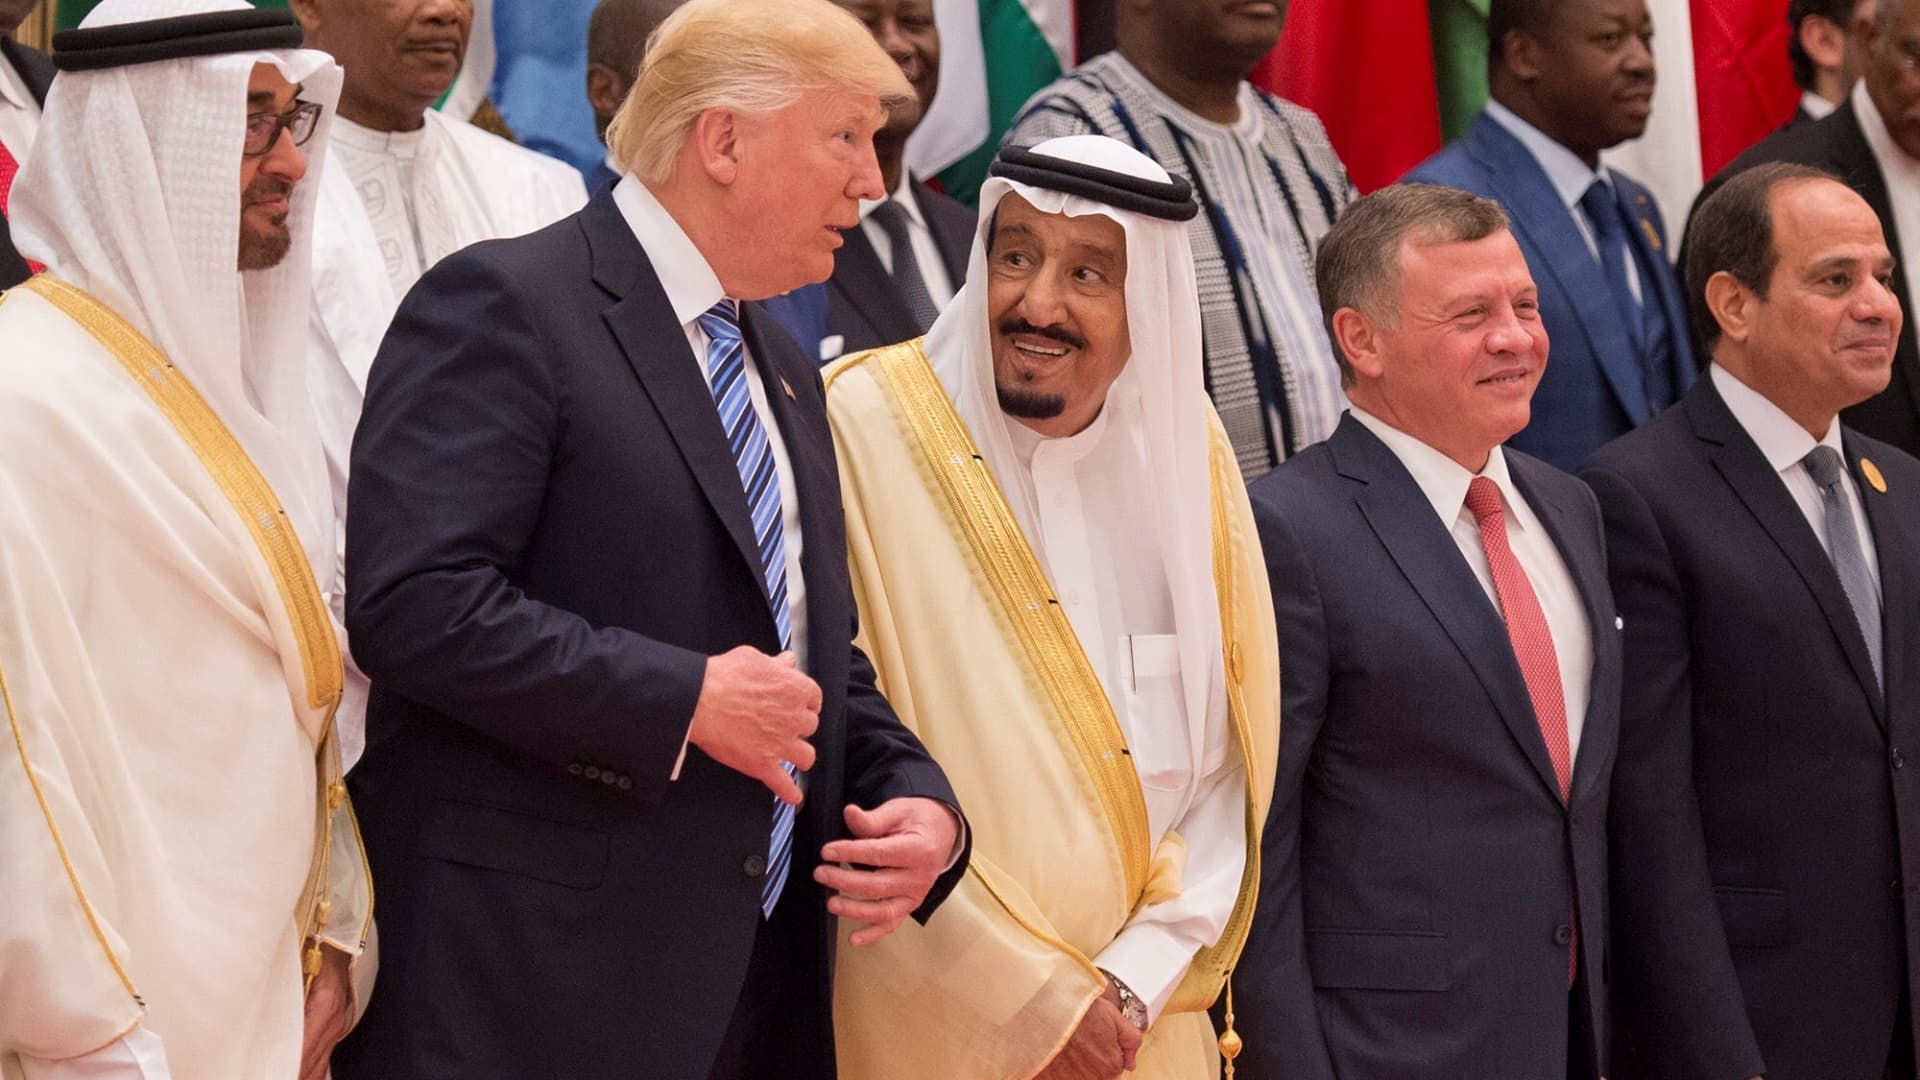 U.S. President Donald Trump (2nd L) and Saudi Arabia's King Salman bin Abdulaziz Al Saud (C) at the the Arabic Islamic American Summit in Riyadh, Saudi Arabia on May 21, 2017.